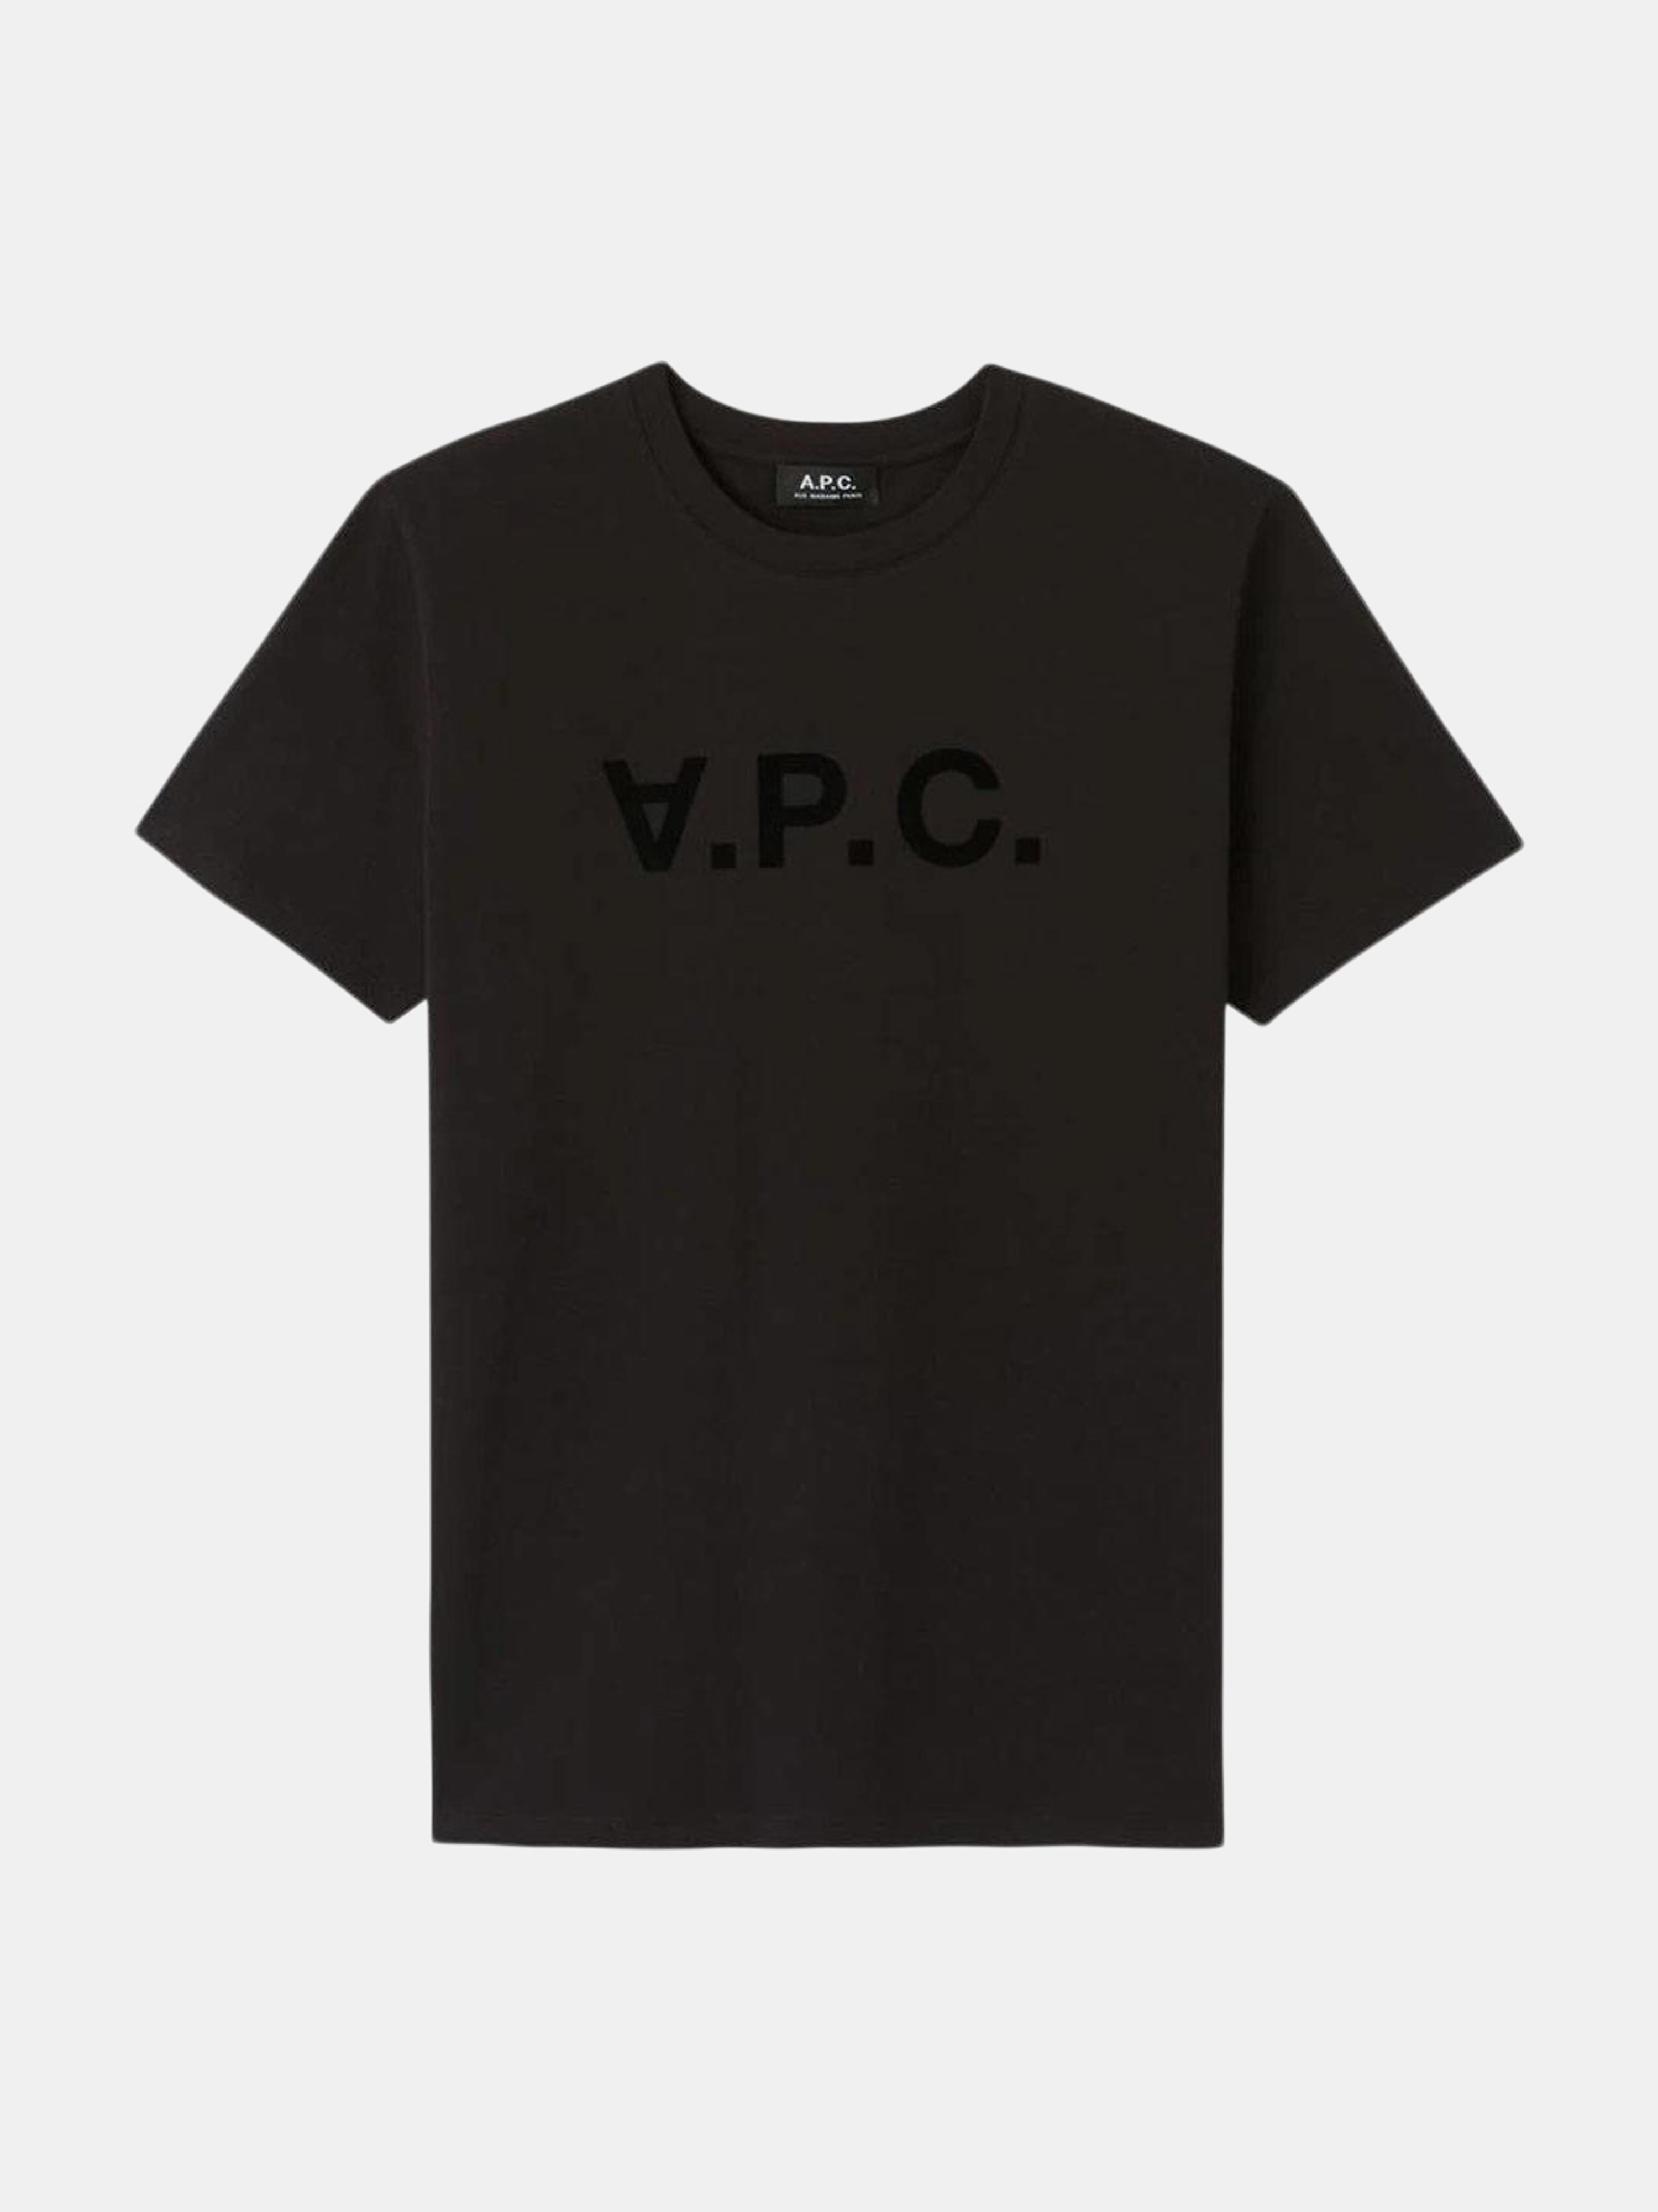 Apc Vpc T-shirt 'black'